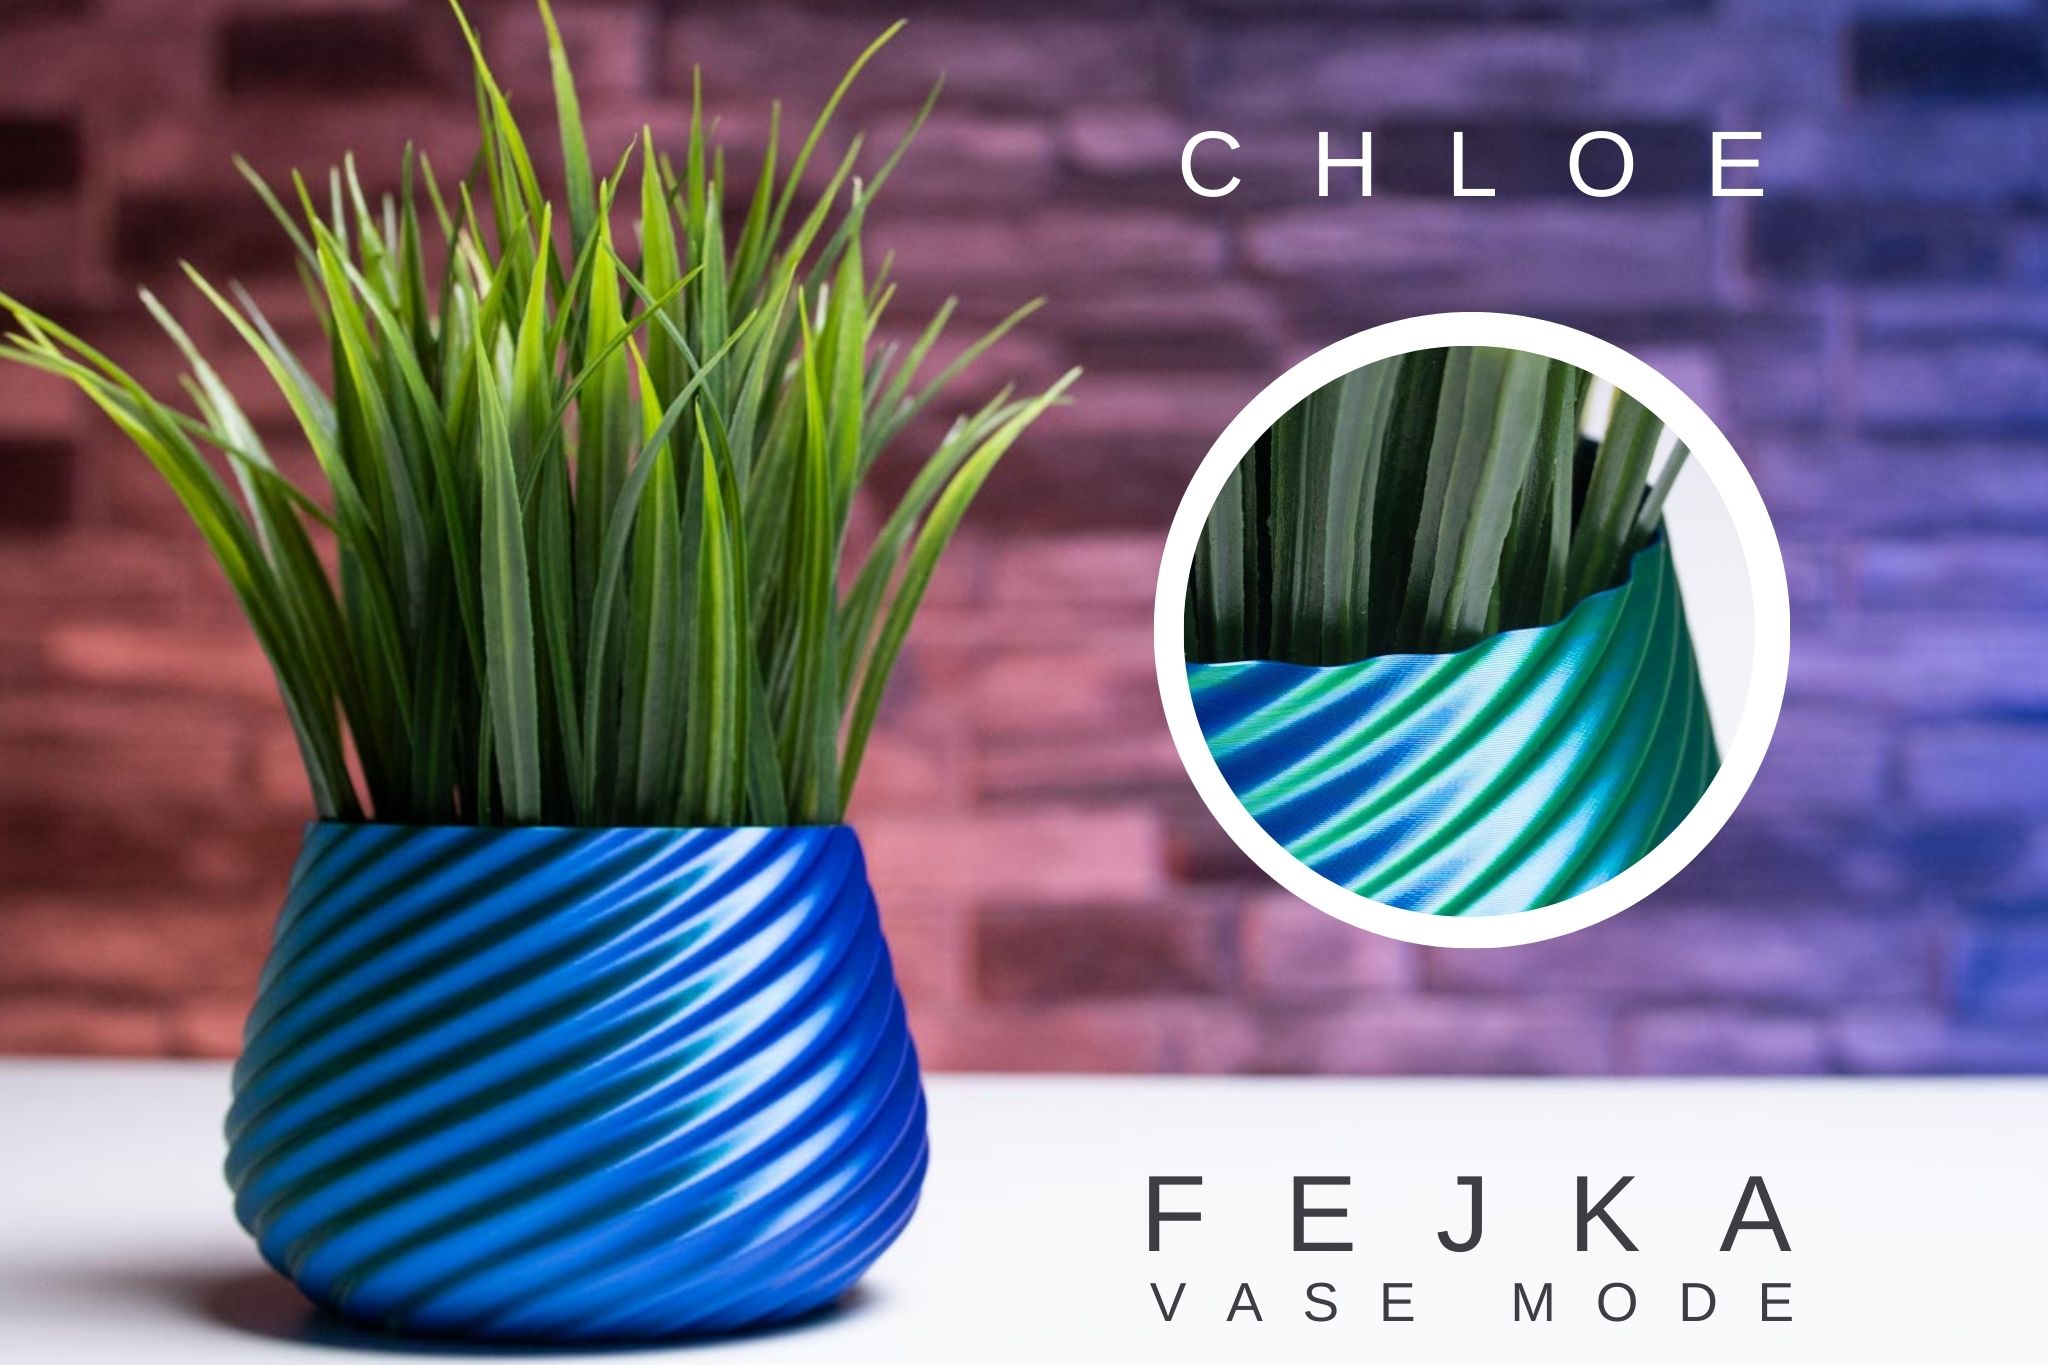 3D Printed Planter and Pot for Ikea Fejka - Vase CHLOE